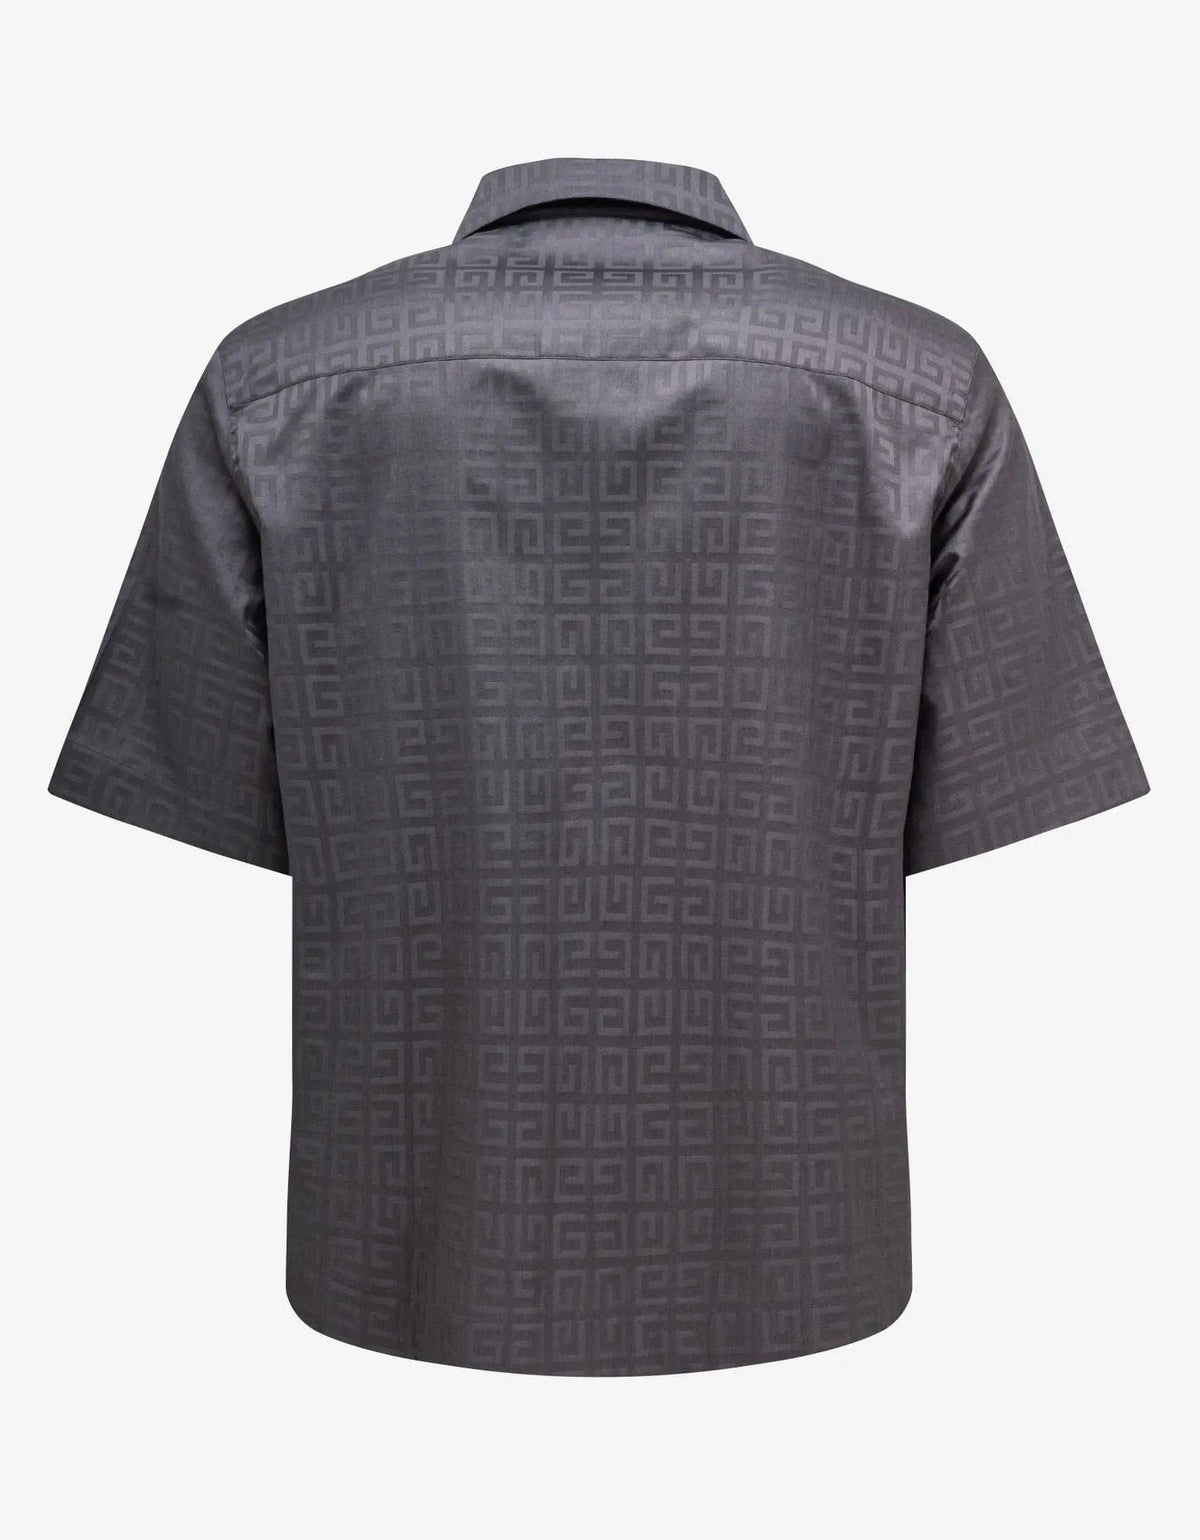 Givenchy Grey 4G Jacquard Zipped Shirt